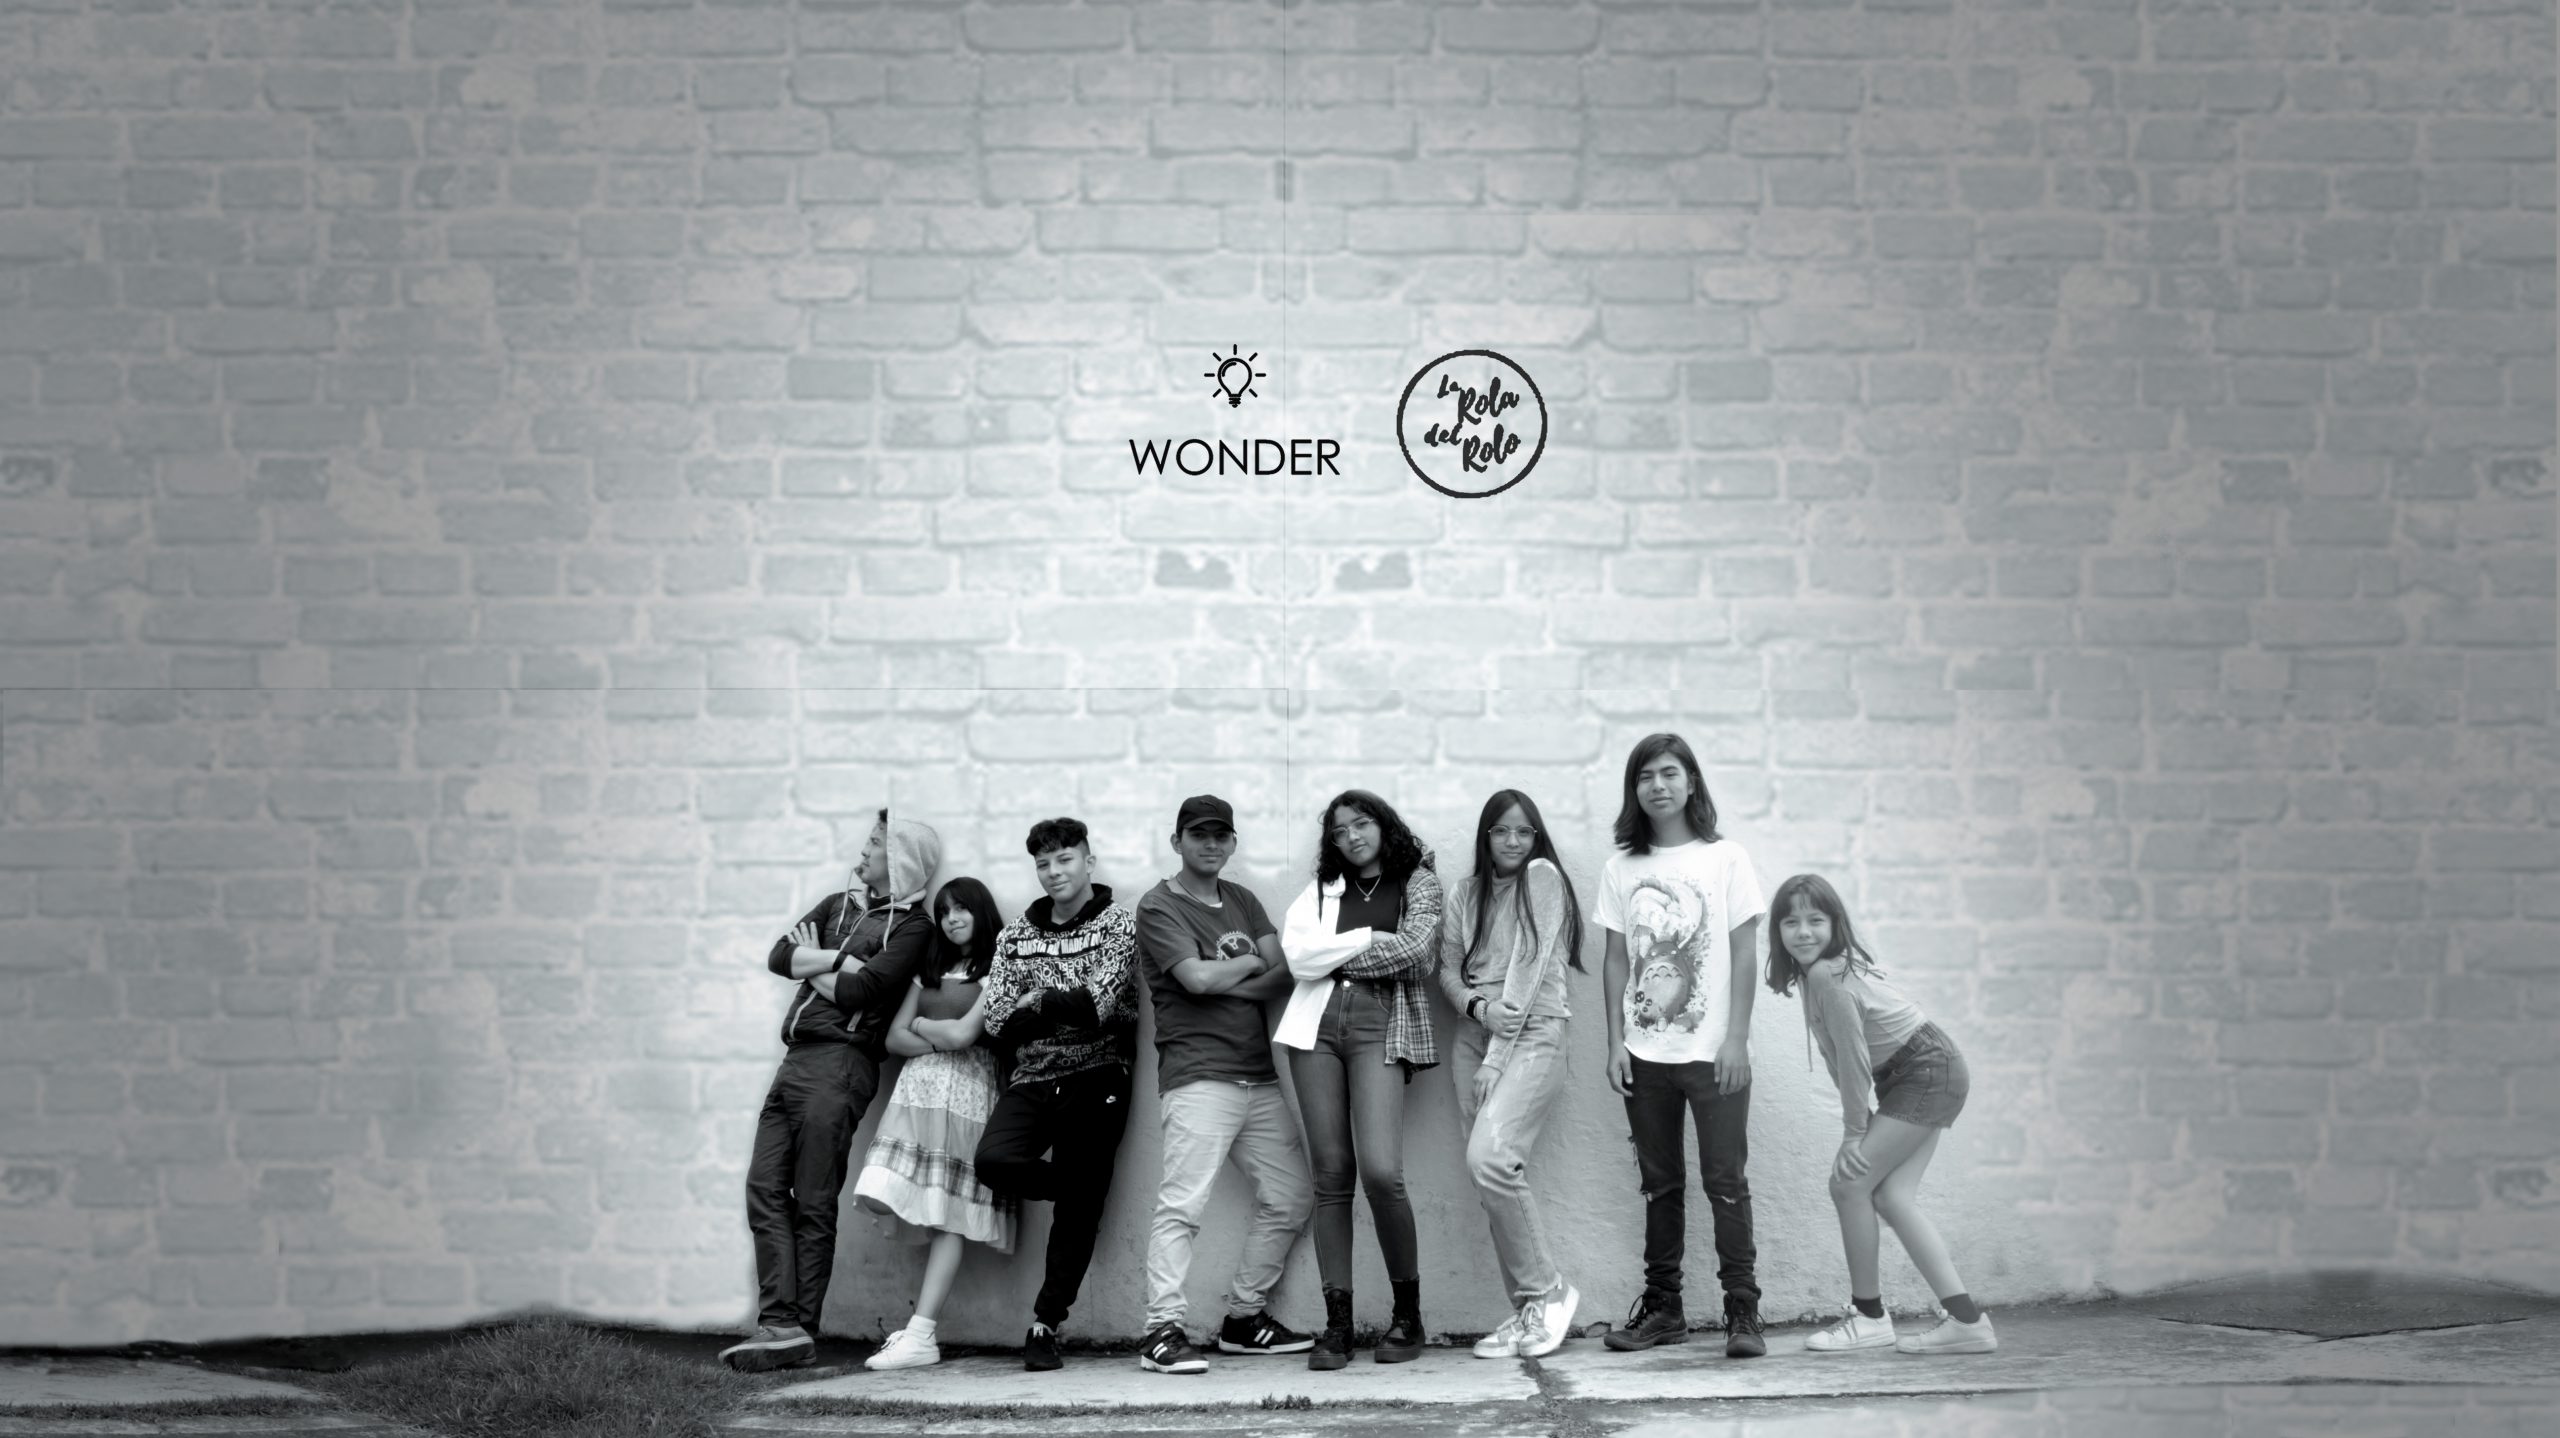 02-Foto-WONDER-ROLA-ver2-scaled